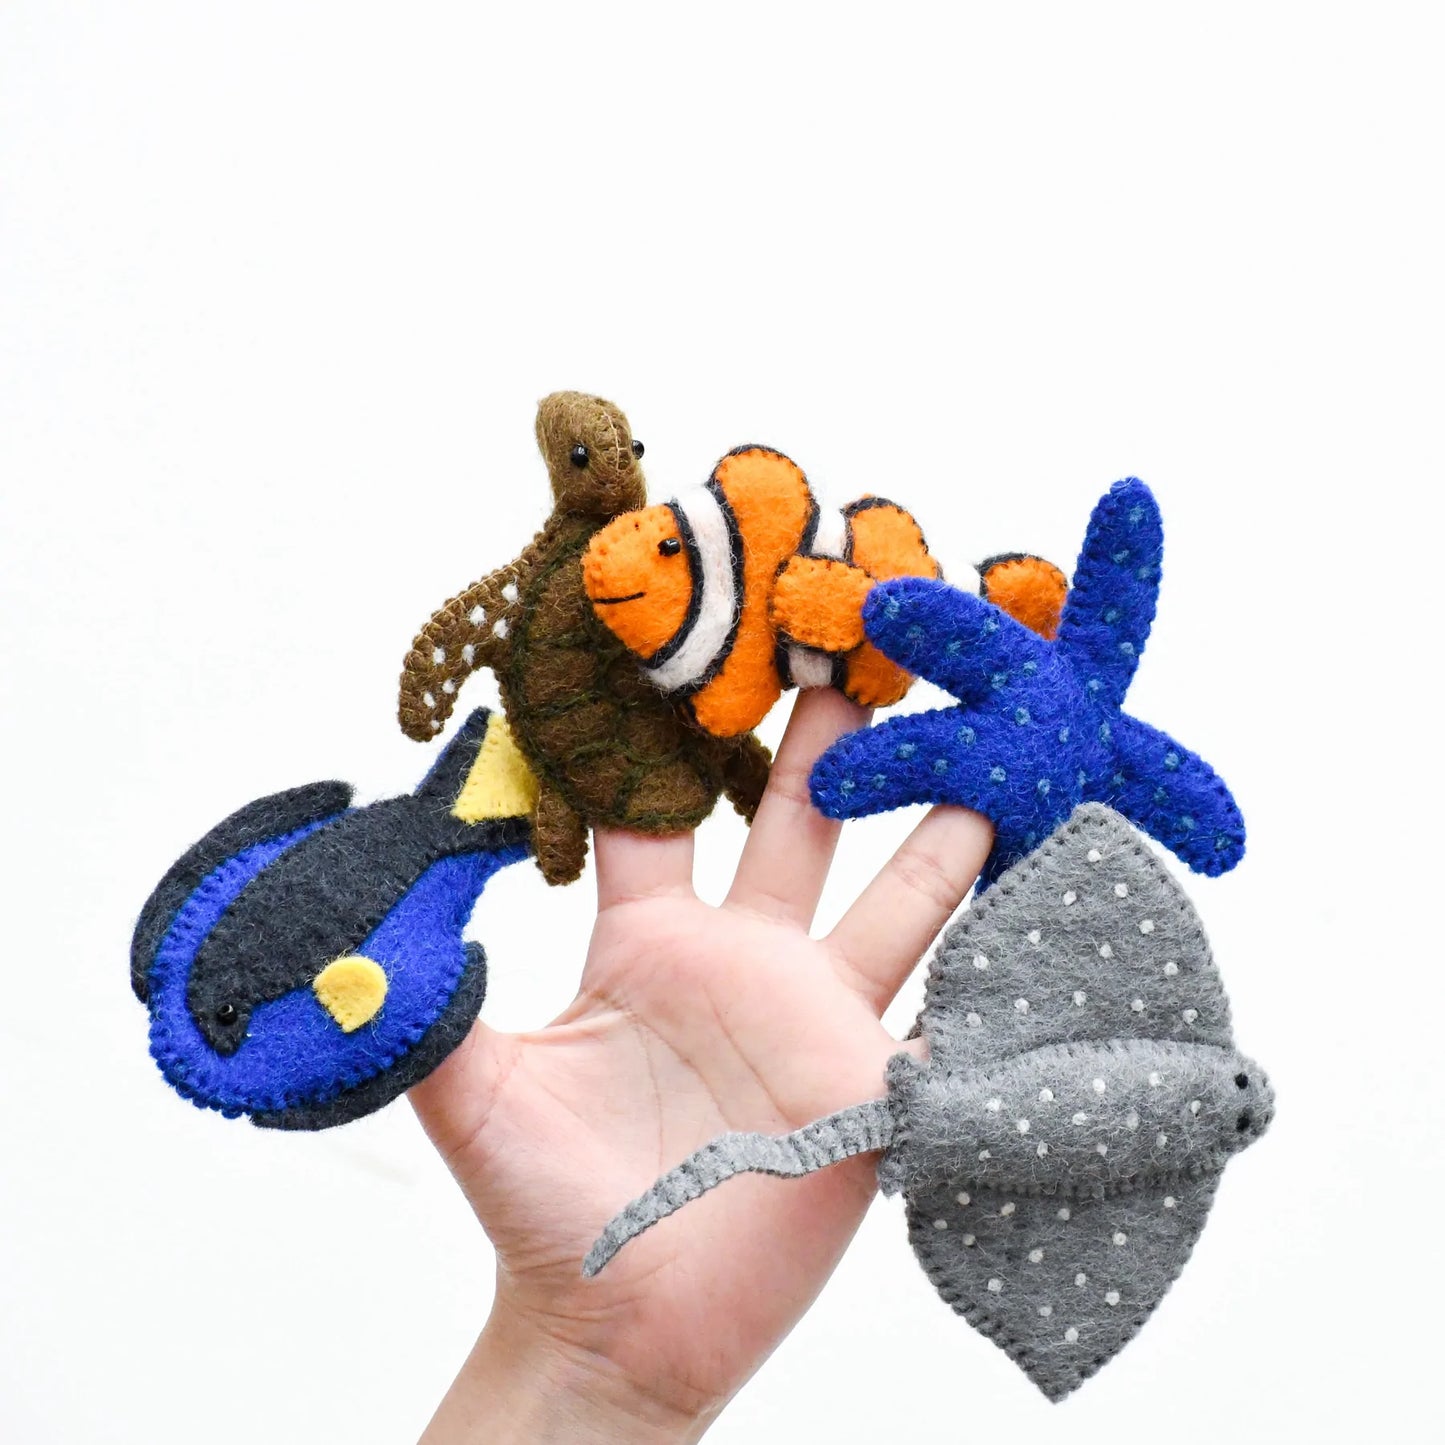 Australian Coral Reef Under the Sea - Finger puppet set